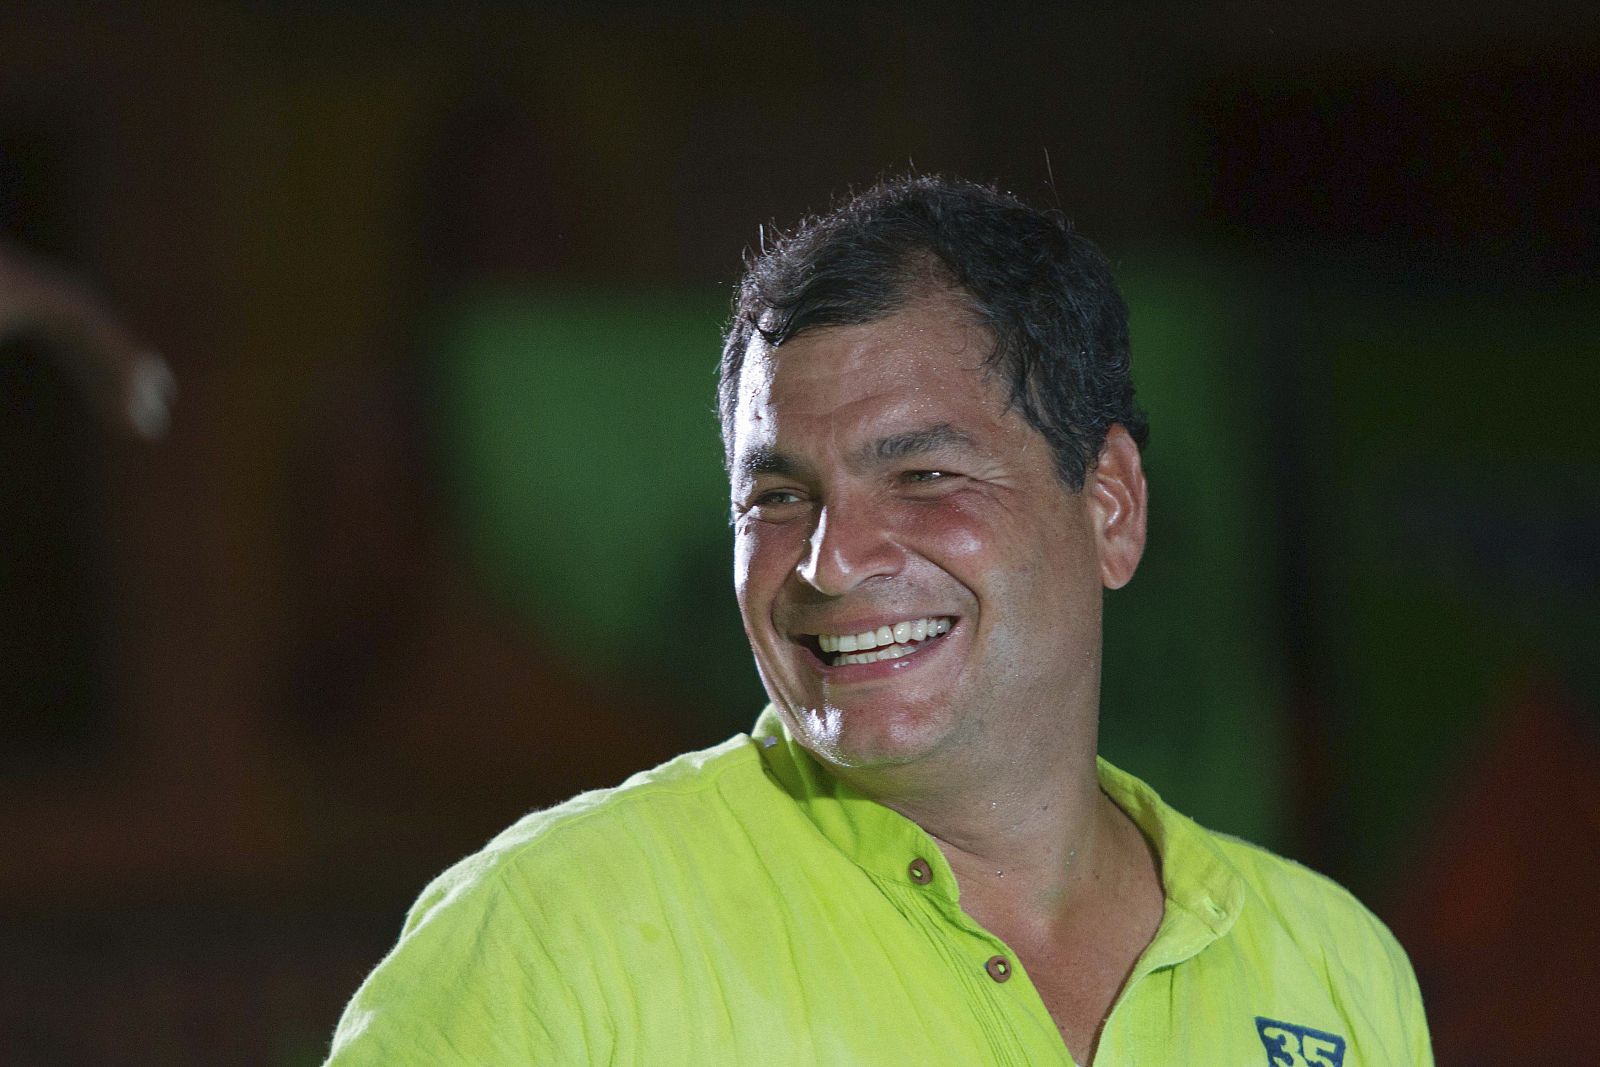 Ecuador's President Correa smiles during his closing political rally in Guayaquil